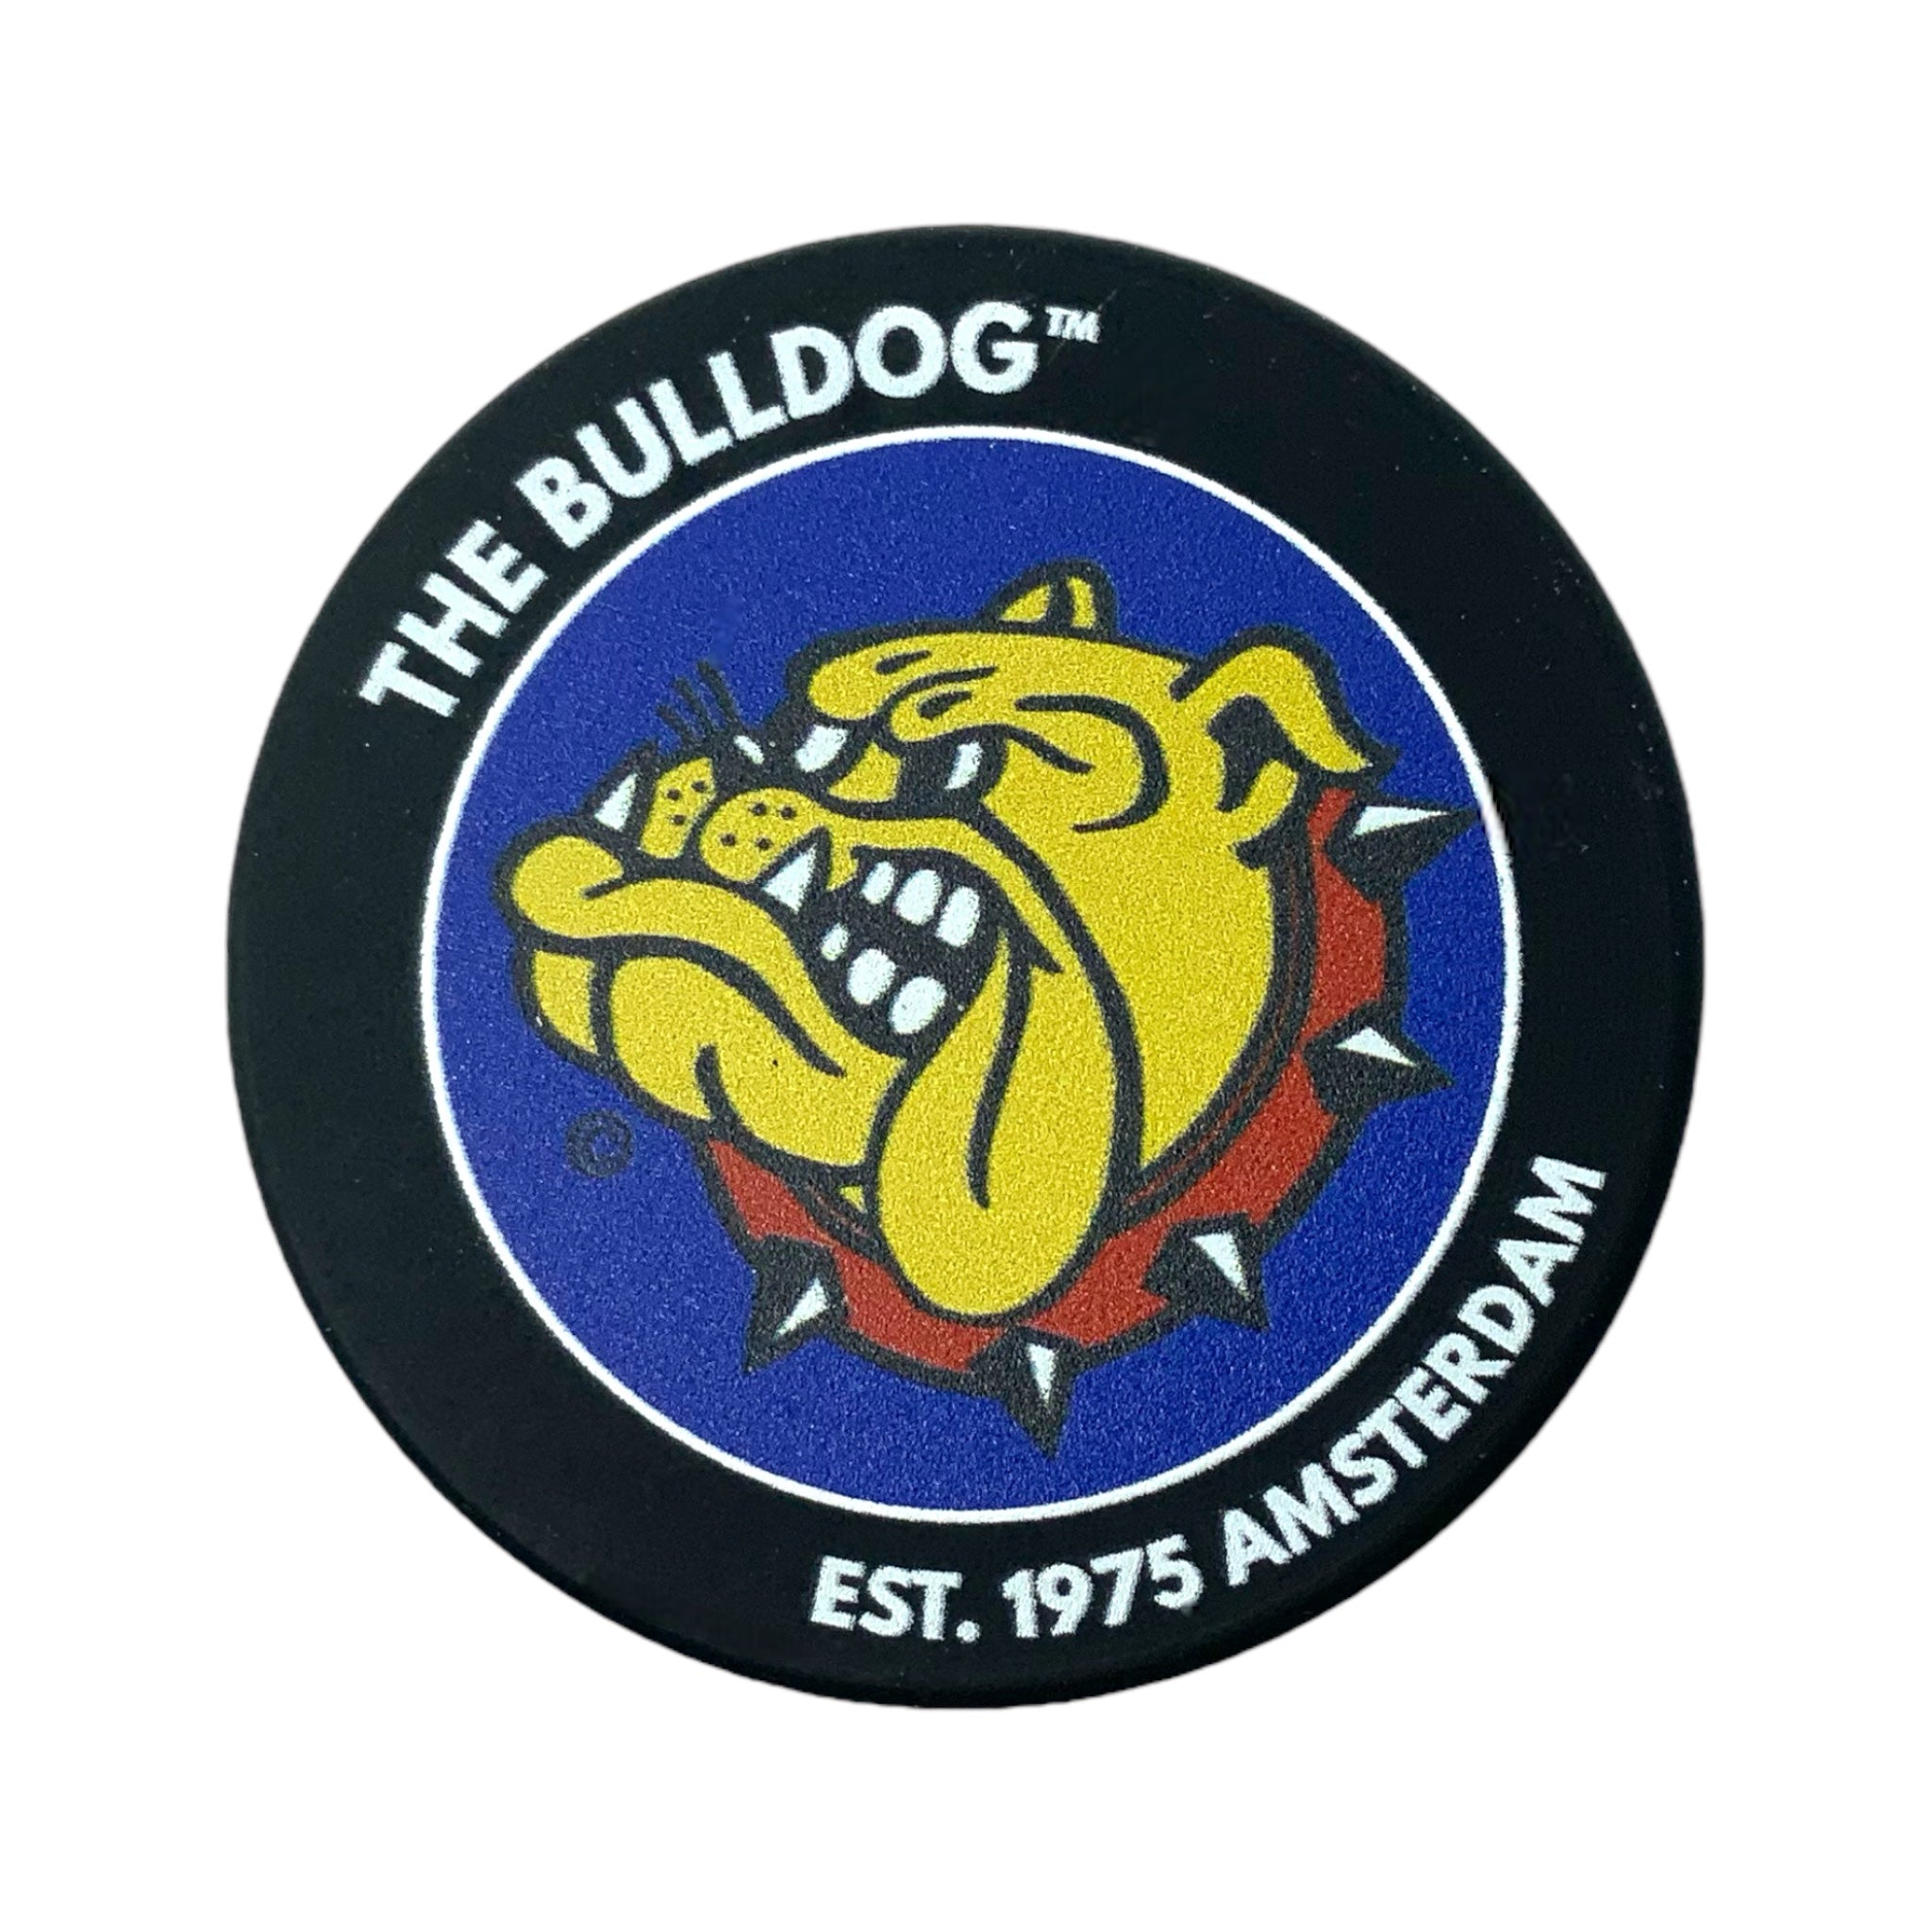 The Bulldog Grinder Black Metal Logo